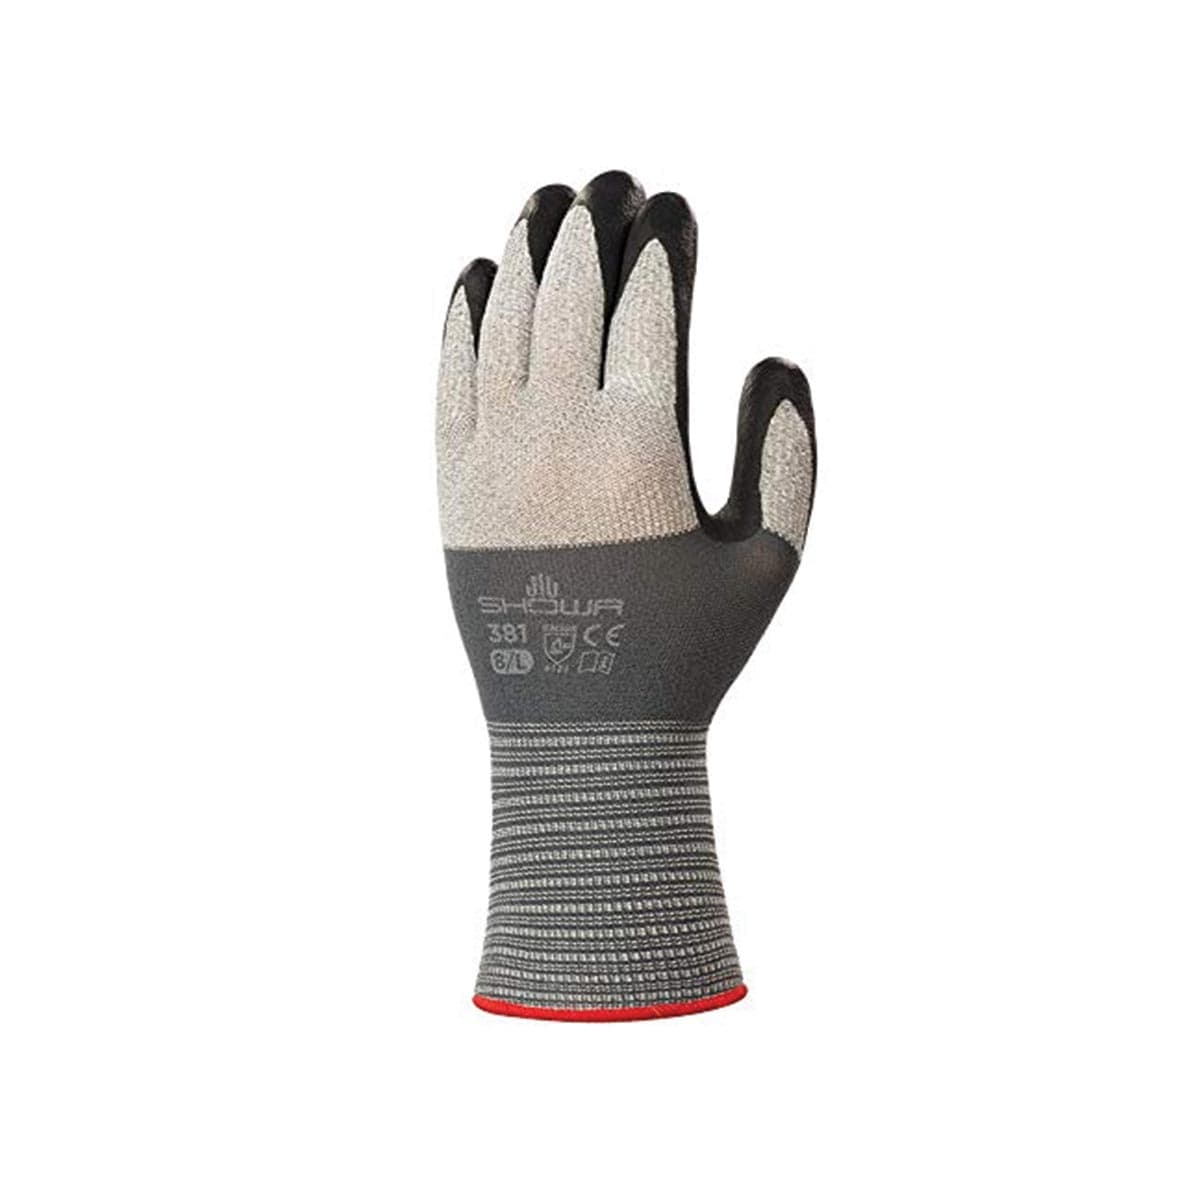 Showa 381 Ultra-Lightweight Nitrile Coated Gloves